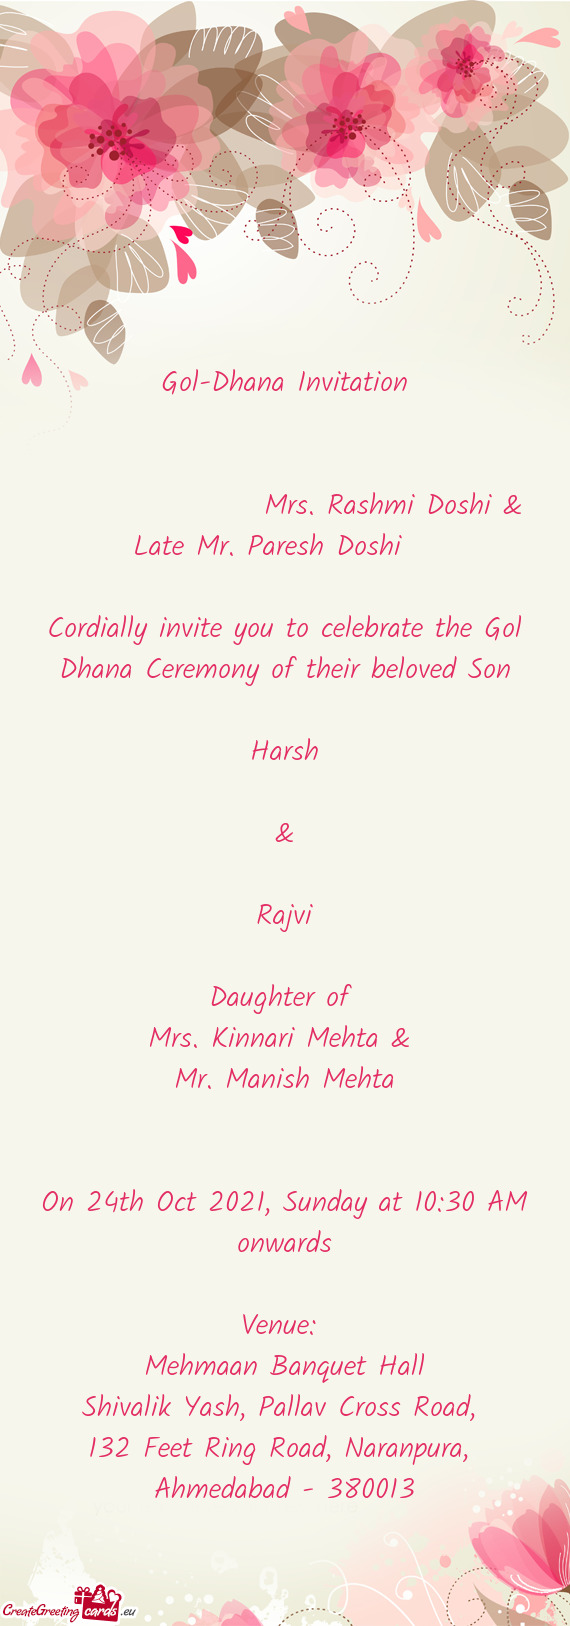 Mrs. Rashmi Doshi & Late Mr. Paresh Doshi